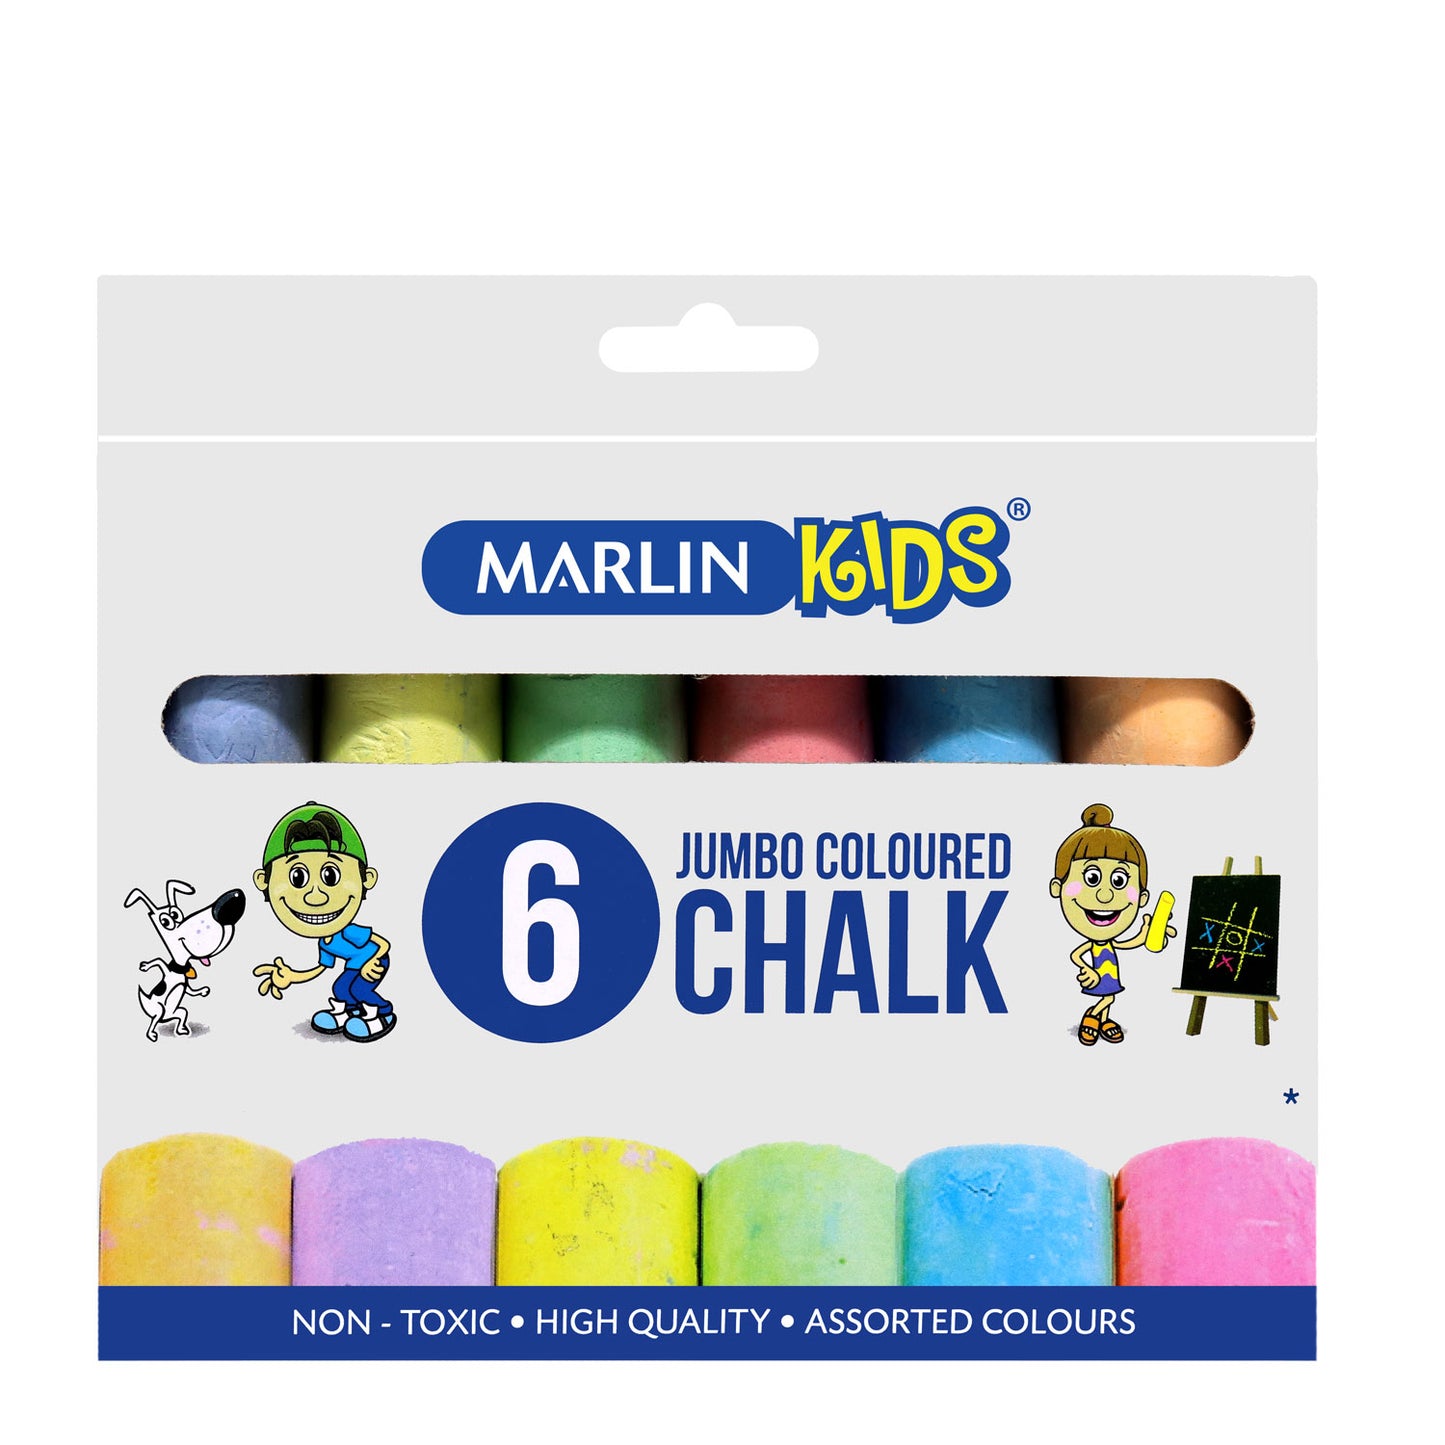 Marlin Kids Colour Chalk Jumbo (Colour, 6 Pieces per Box x 12 Boxes)